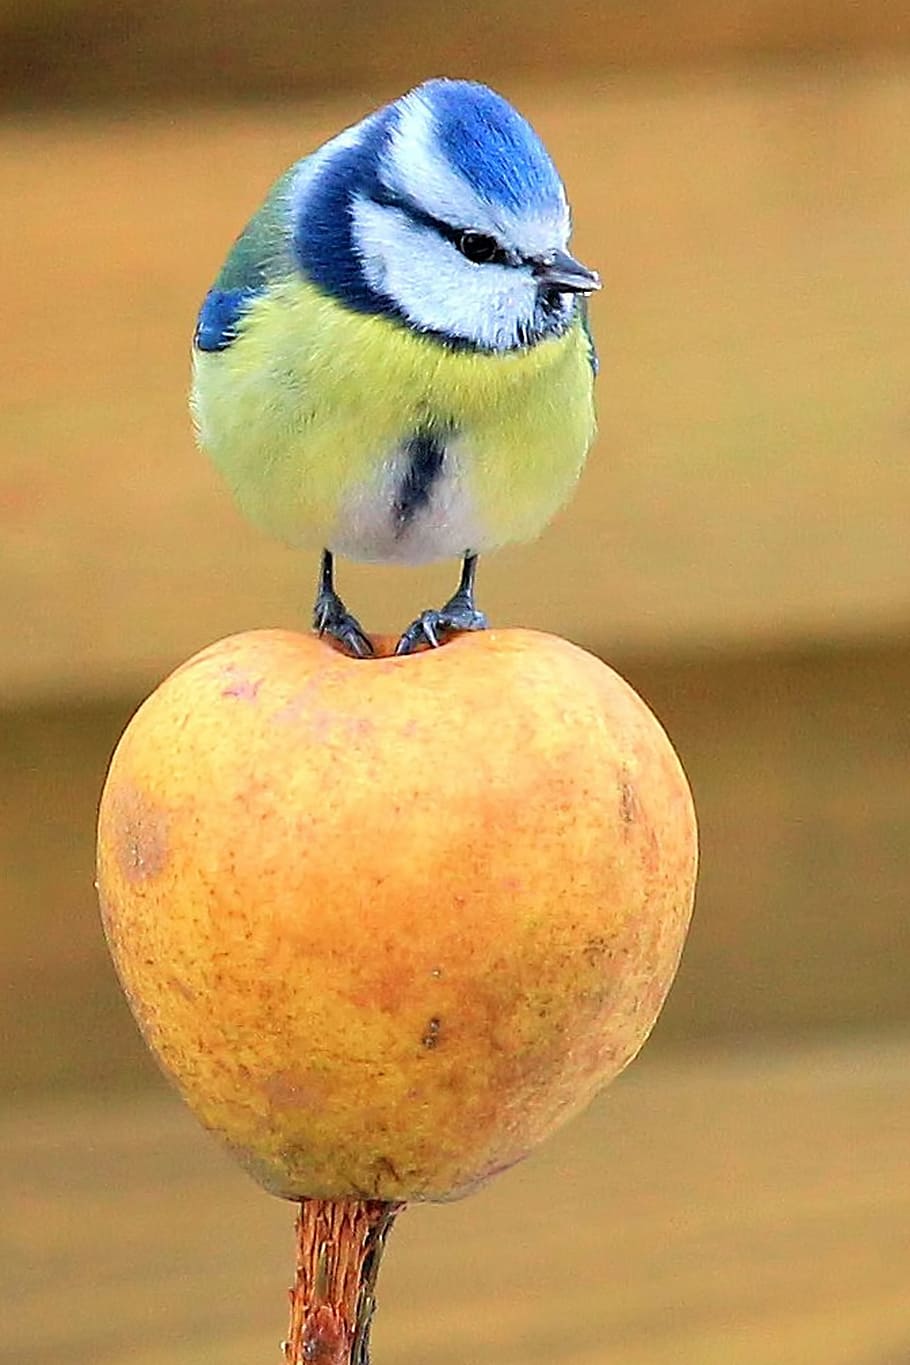 biru, kuning, burung, dada, dada biru, apel, berdiri, burung penyanyi, fotografi satwa liar, burung kecil